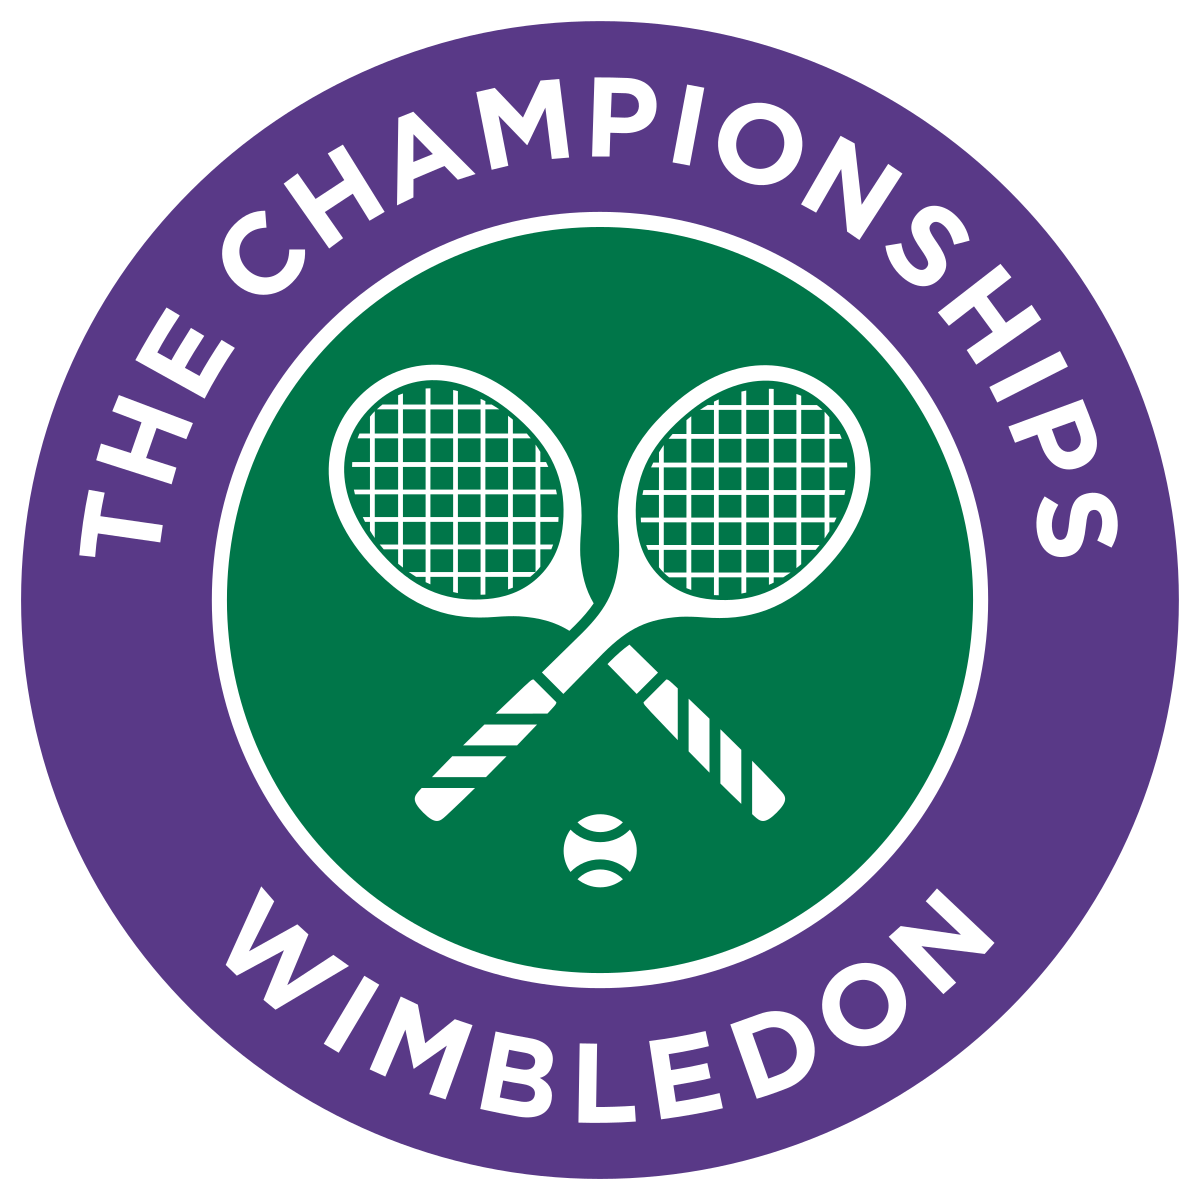 Wimbledon Cup Live